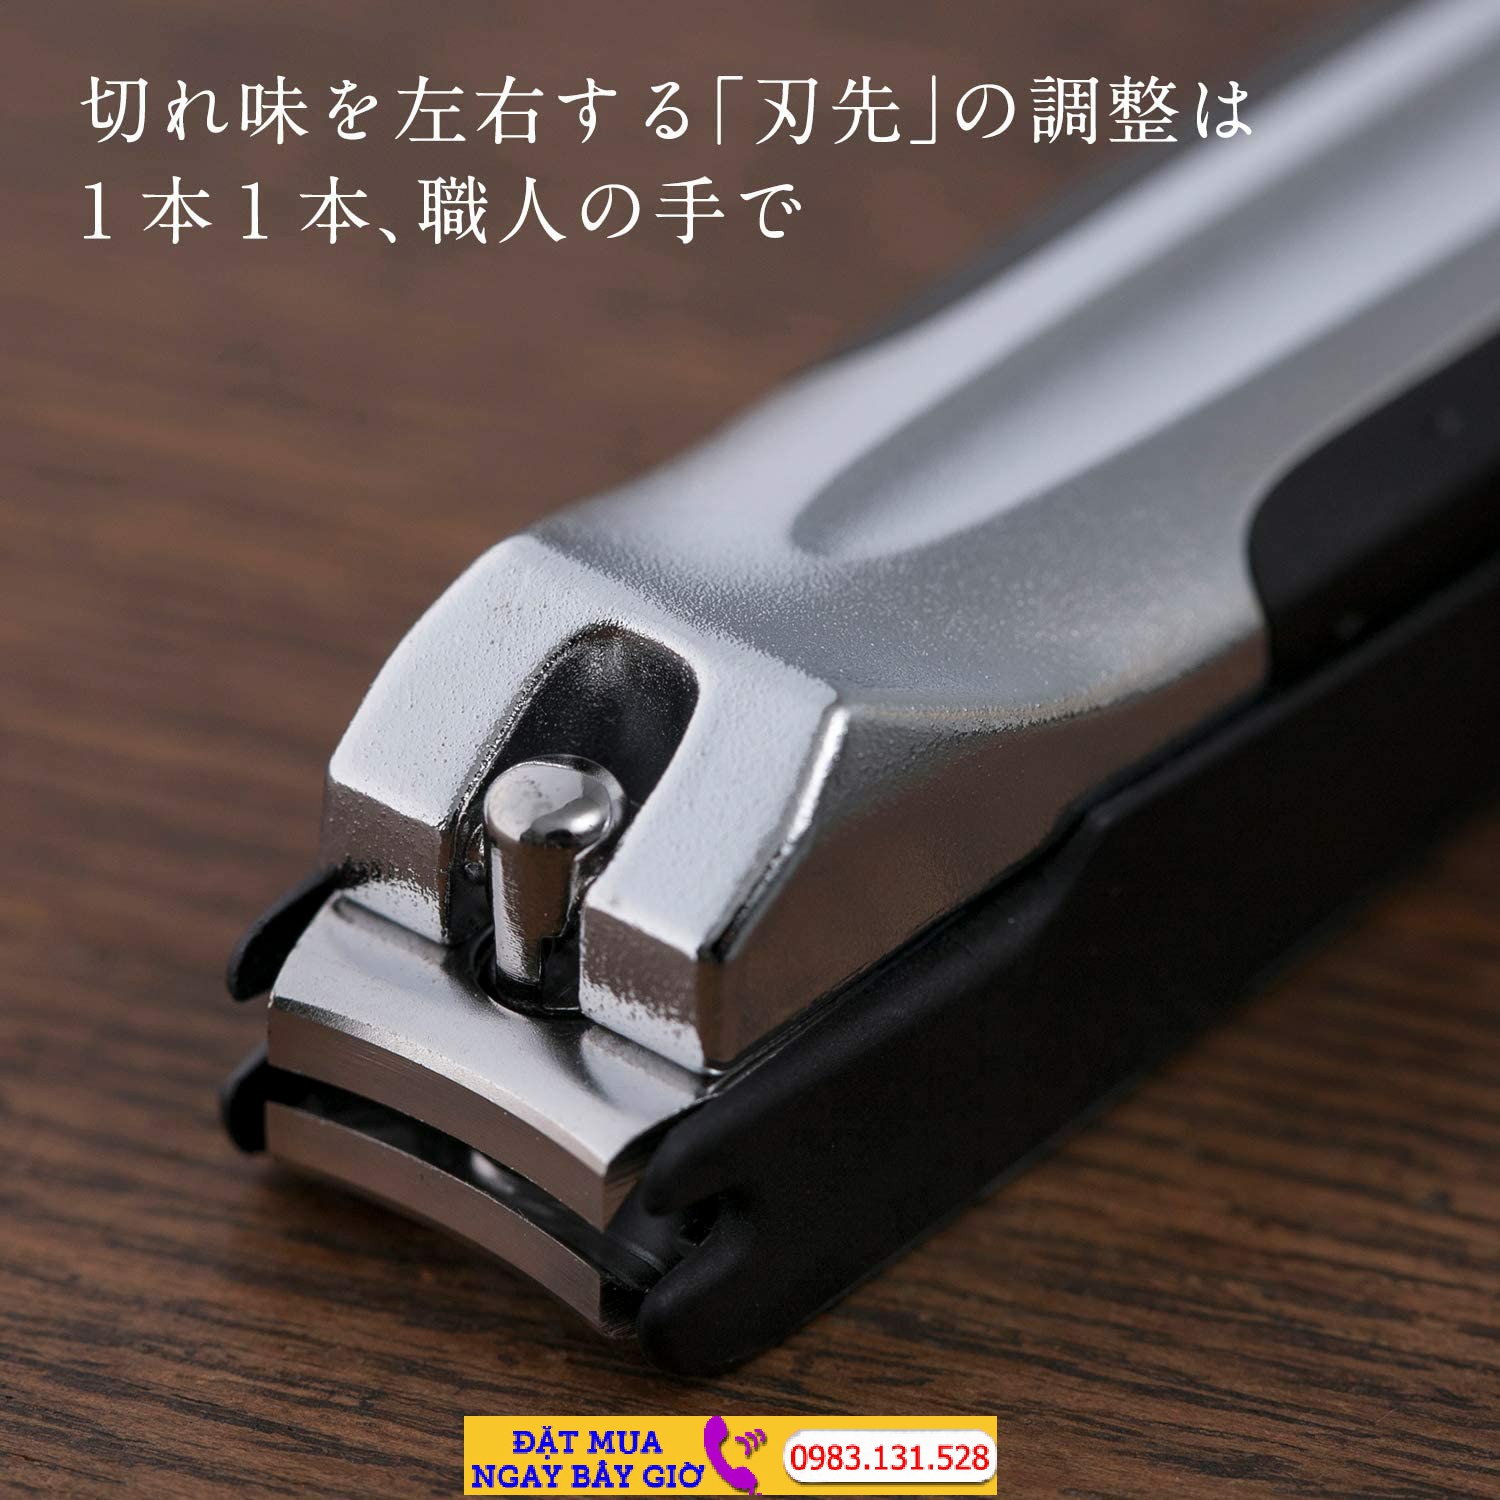 Сделай 1800. Японский книпсер для ногтей. Japanese staple FPPD.